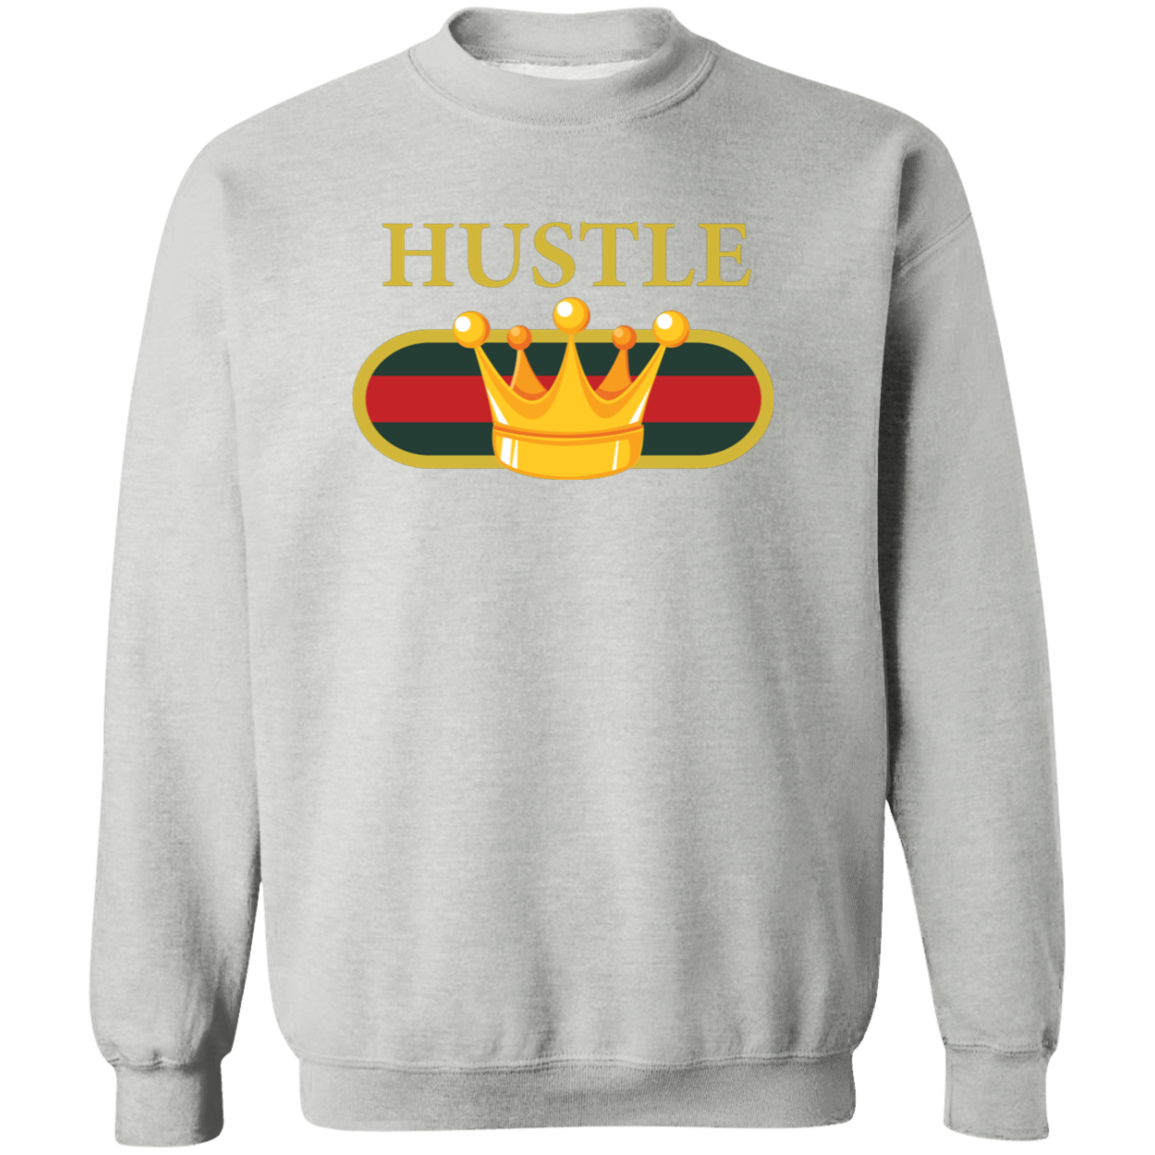 Crown Hustle Premium Crewneck Pullover Sweatshirt - Hustle Everything